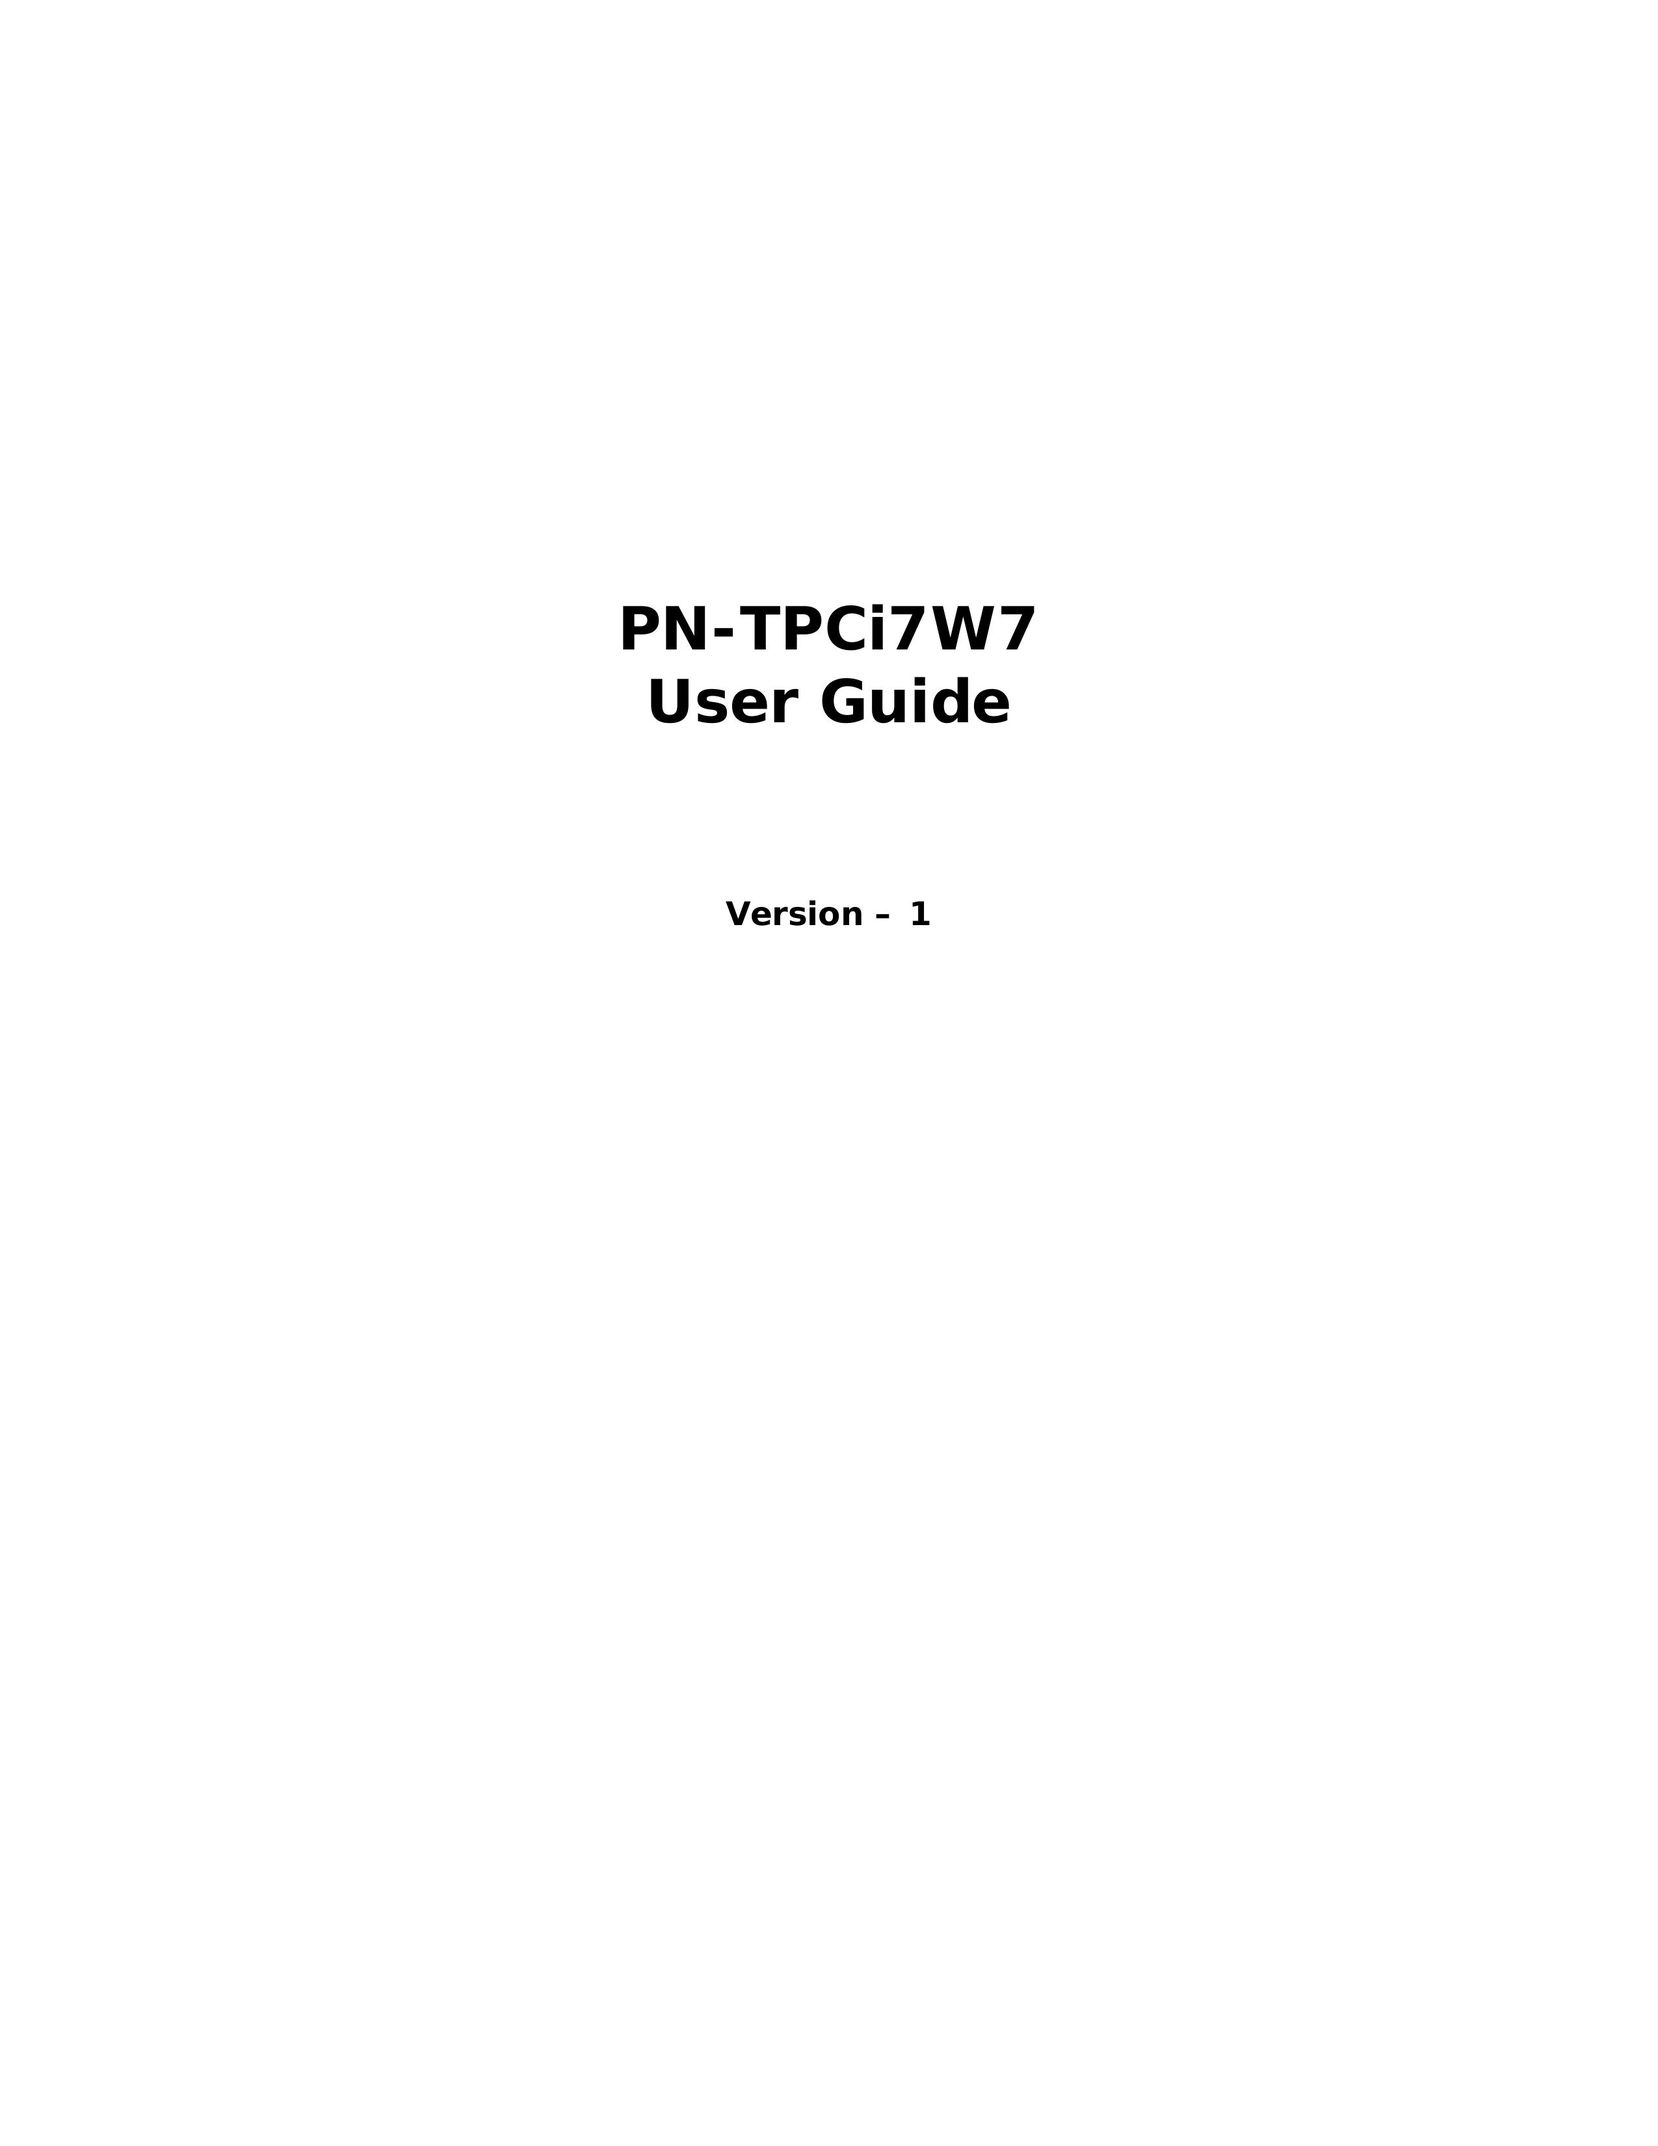 Sharp PN-TPCi7W7 Personal Computer User Manual